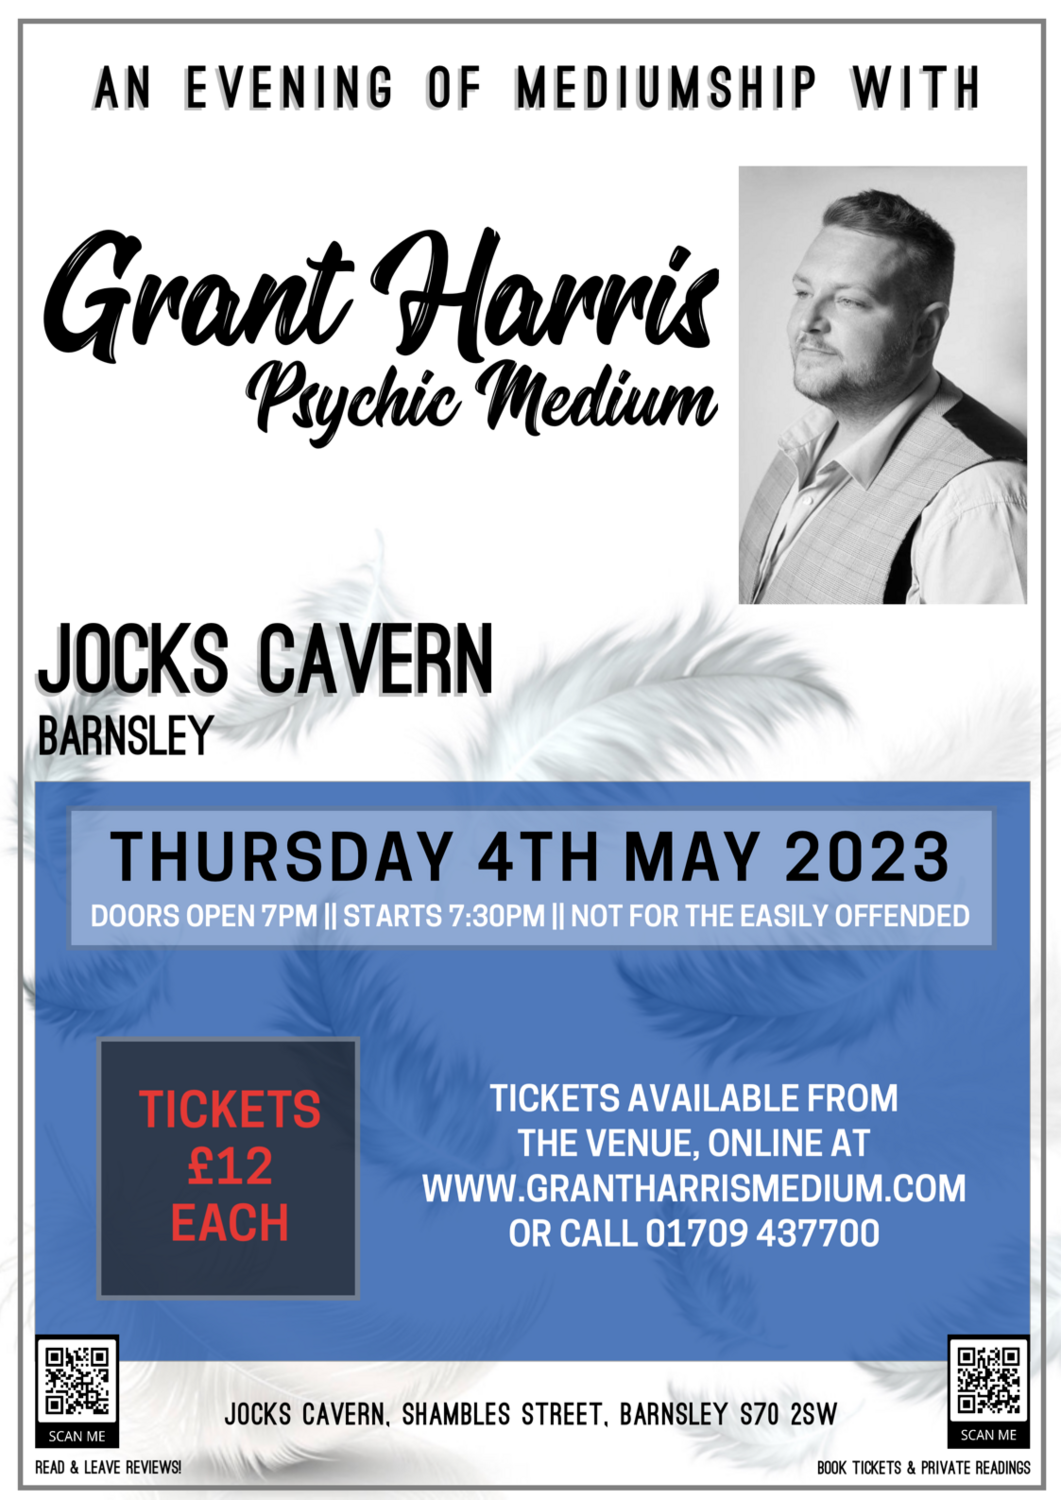 Jocks Cavern, Barnsley, Thursday 4th May 2023